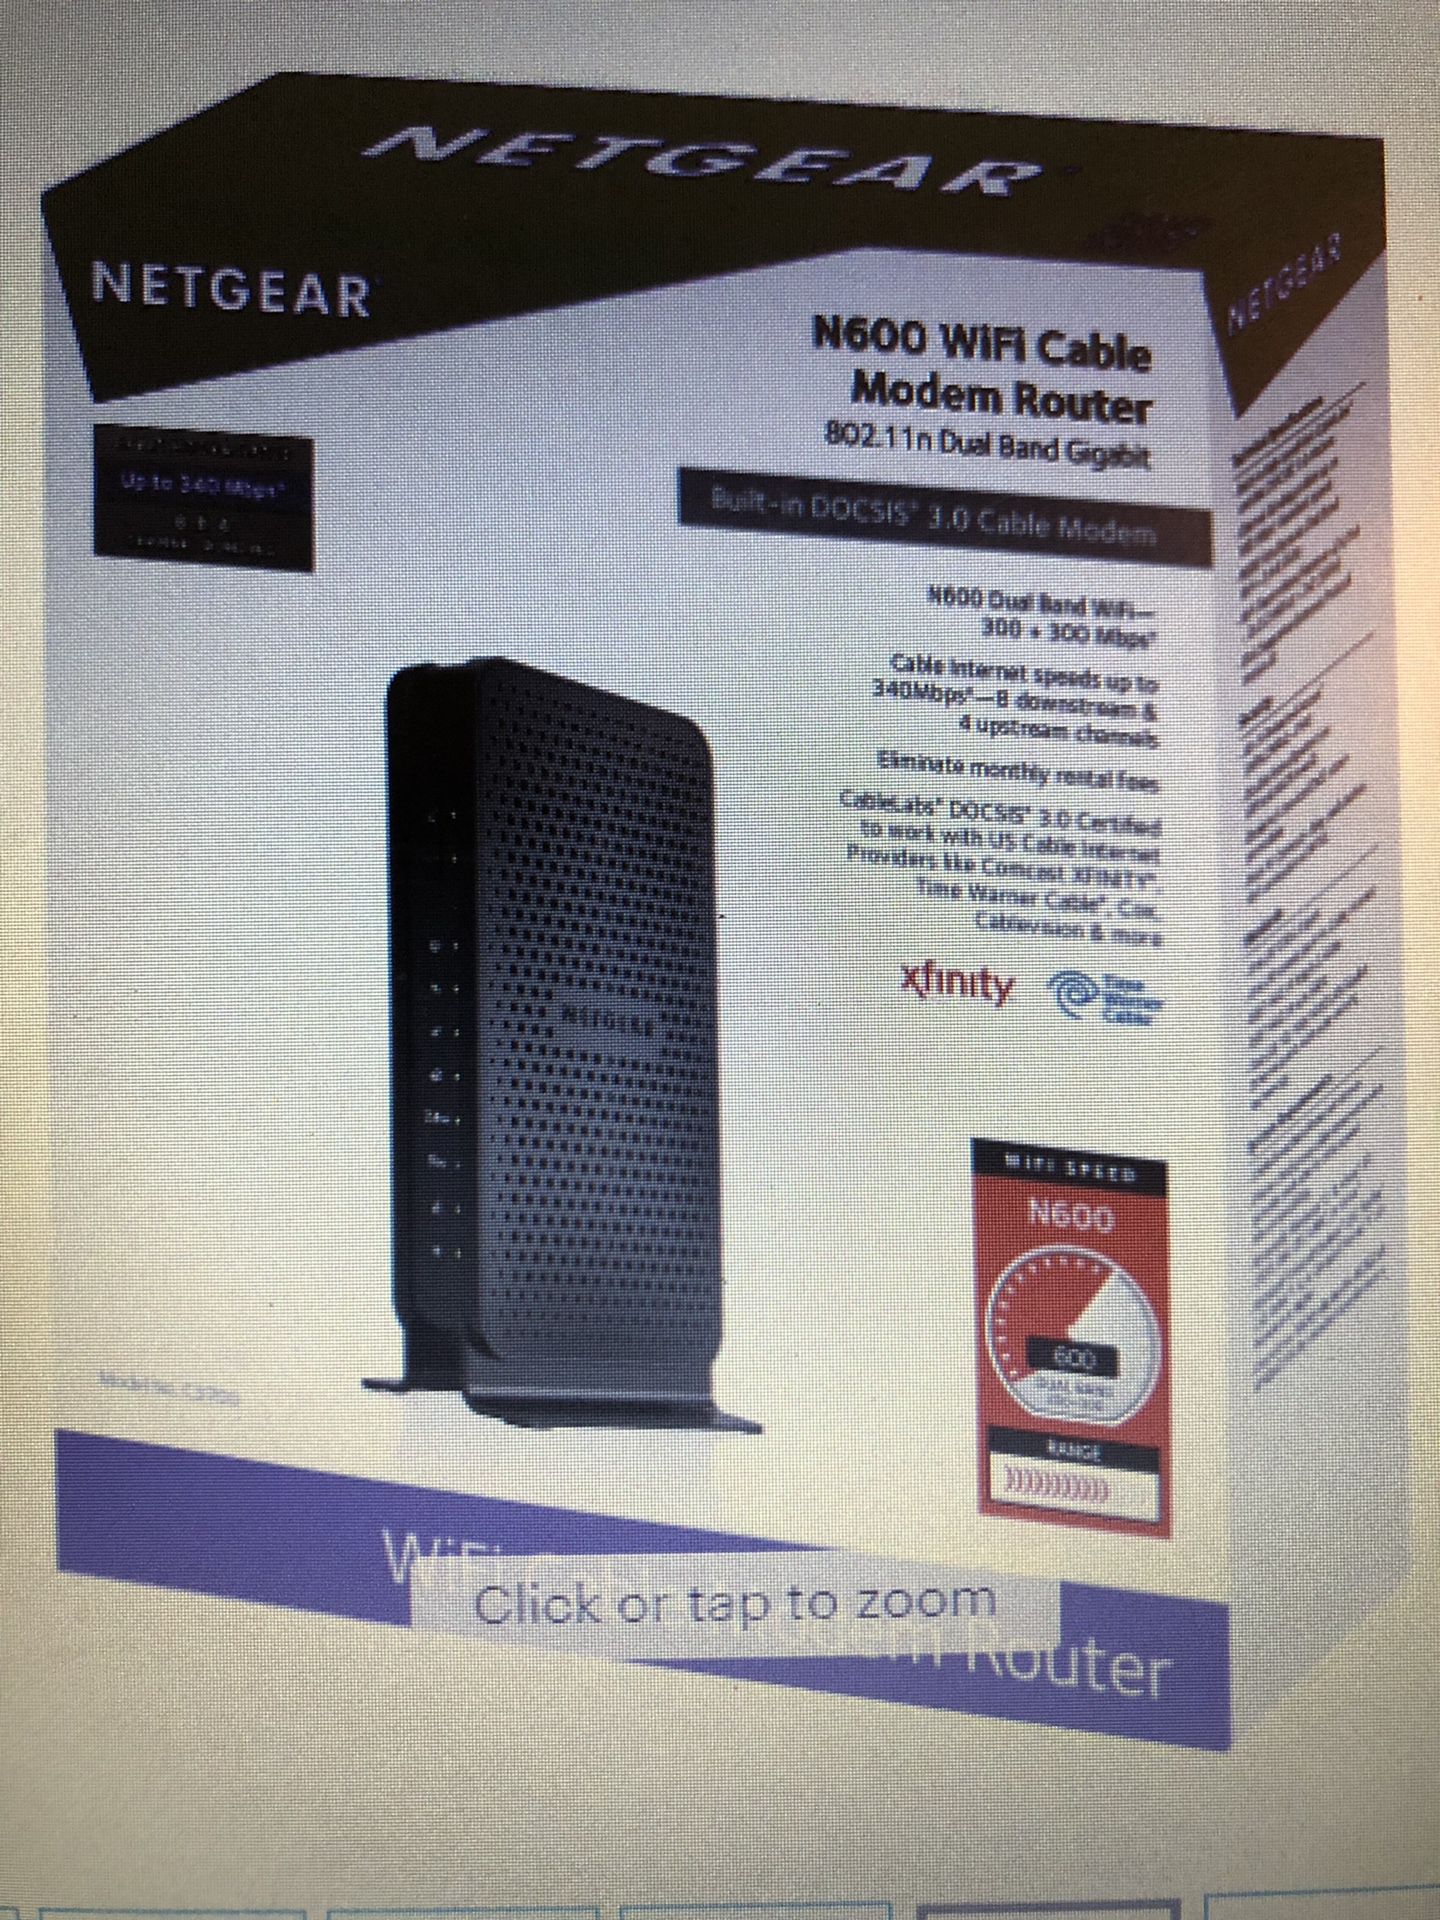 Netgear N600 - WiFi Dual Band Router